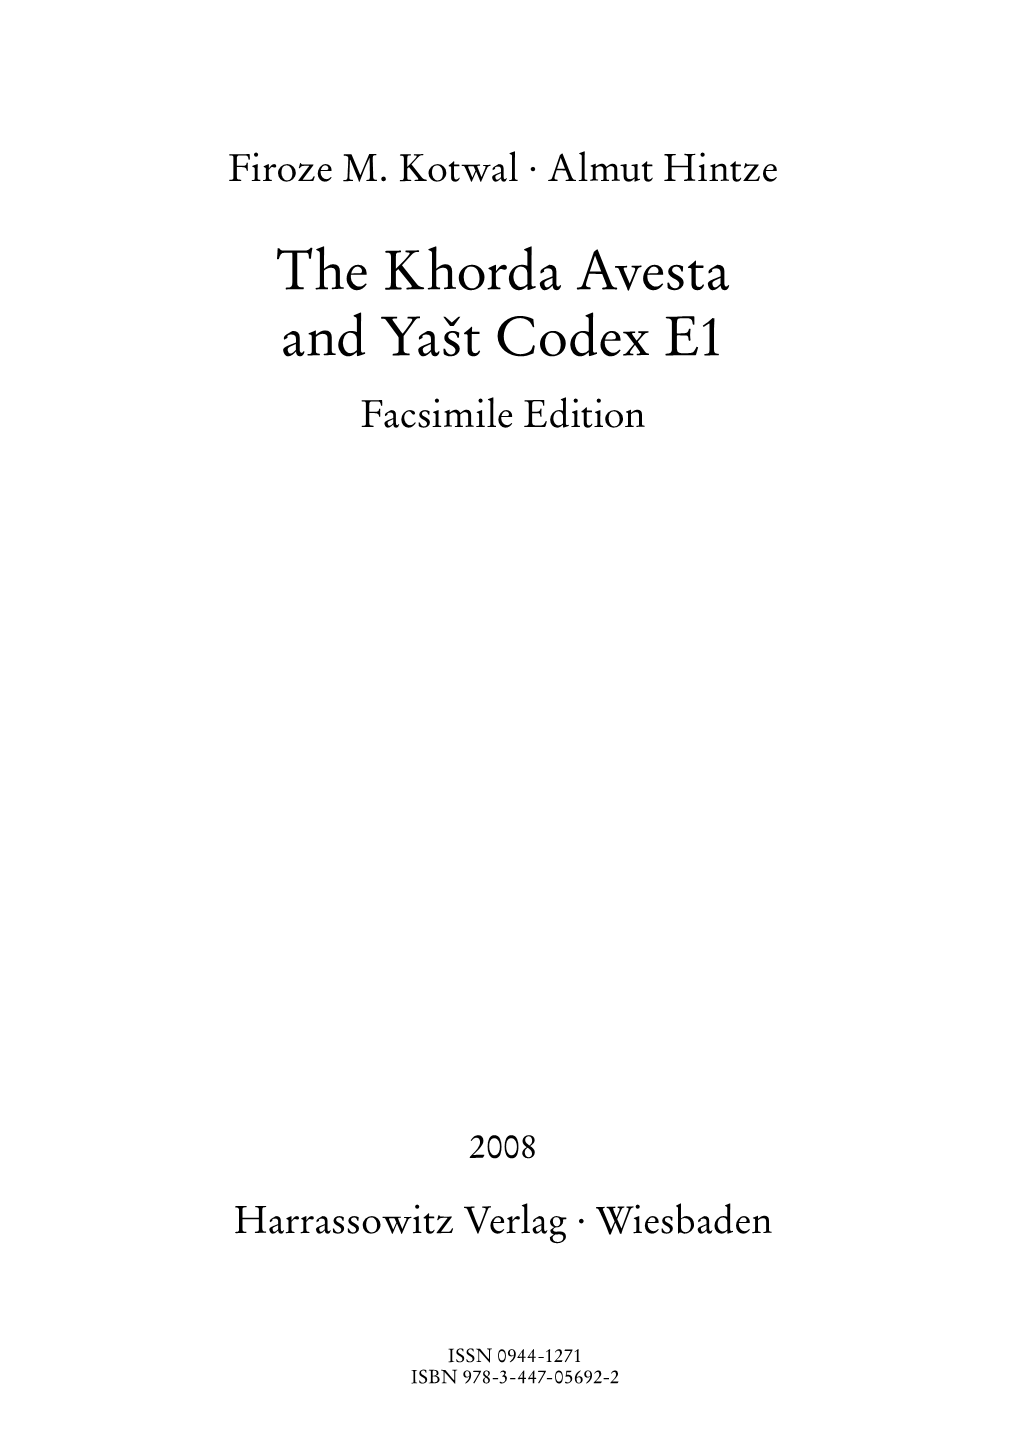 The Khorda Avesta and Yašt Codex E1 Facsimile Edition